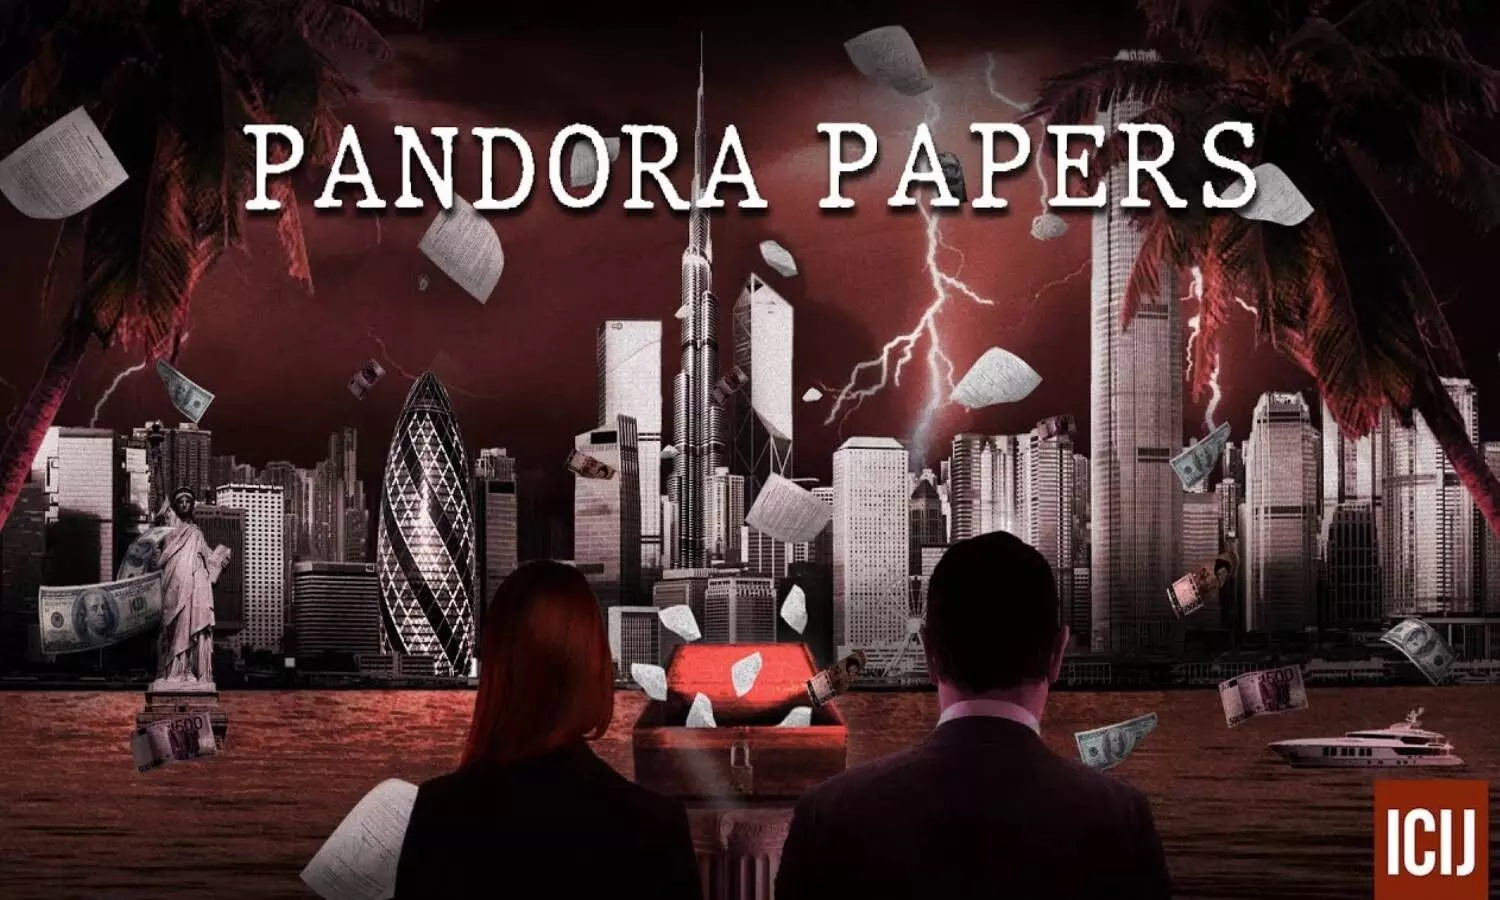 Bizz Buzz explainer: Pandora Papers - What does it reveal?